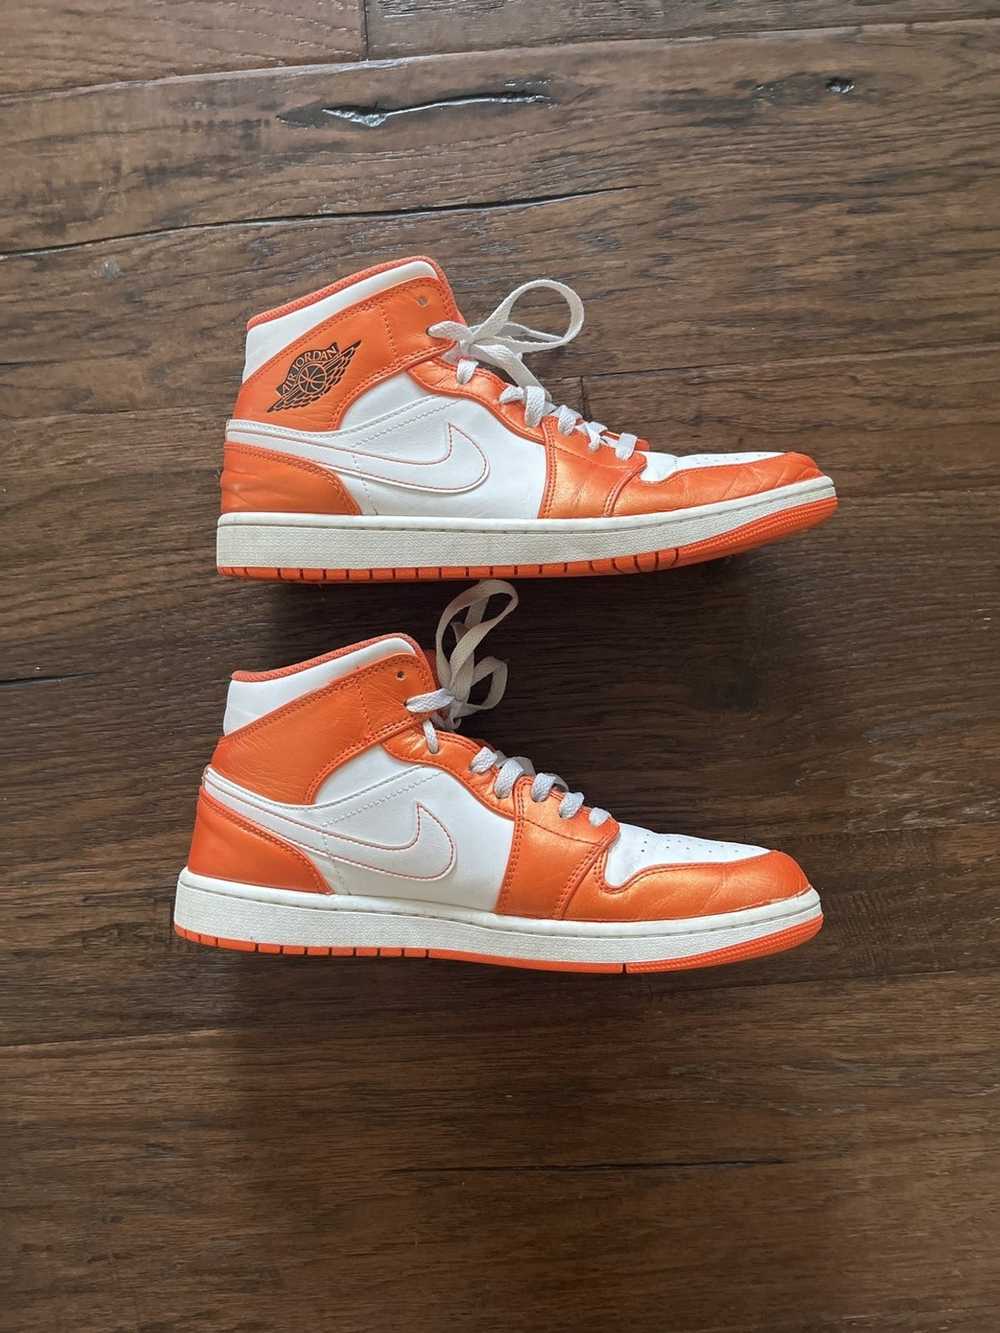 Jordan Brand × Nike Orange jordan ones - image 2